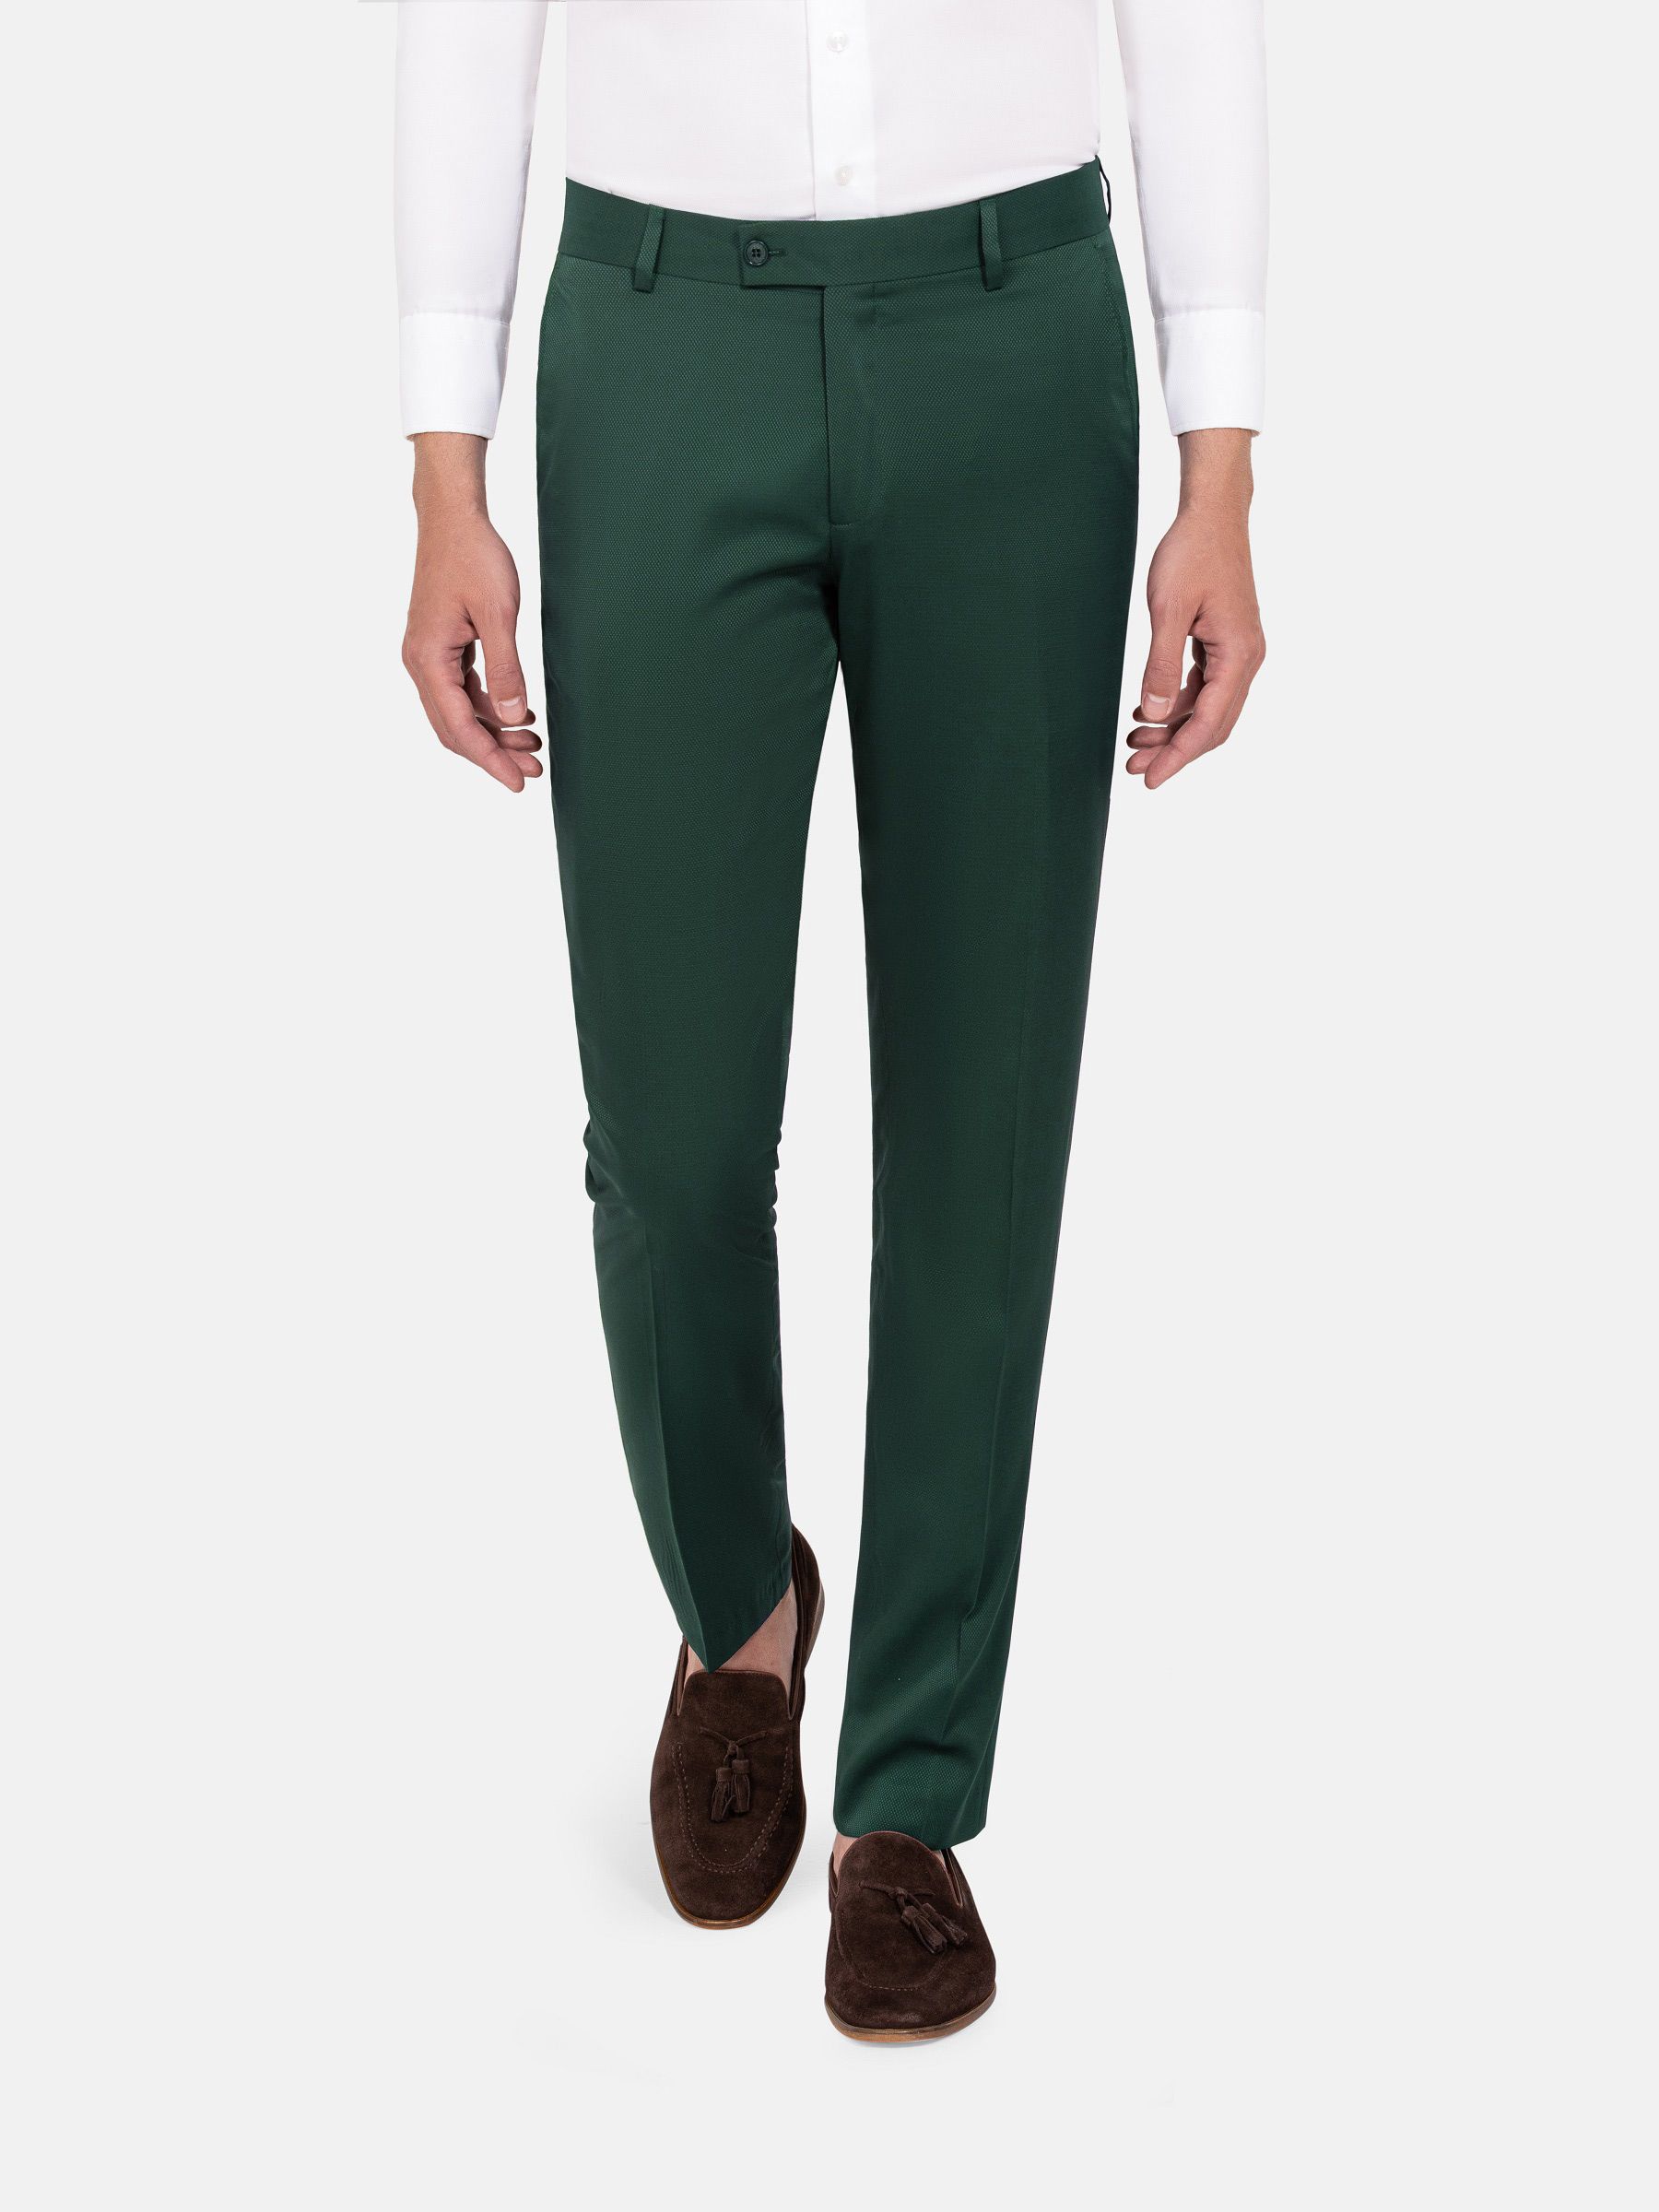 Cotton Candy Pants | Candy pants, Dark green pants, Clothes design